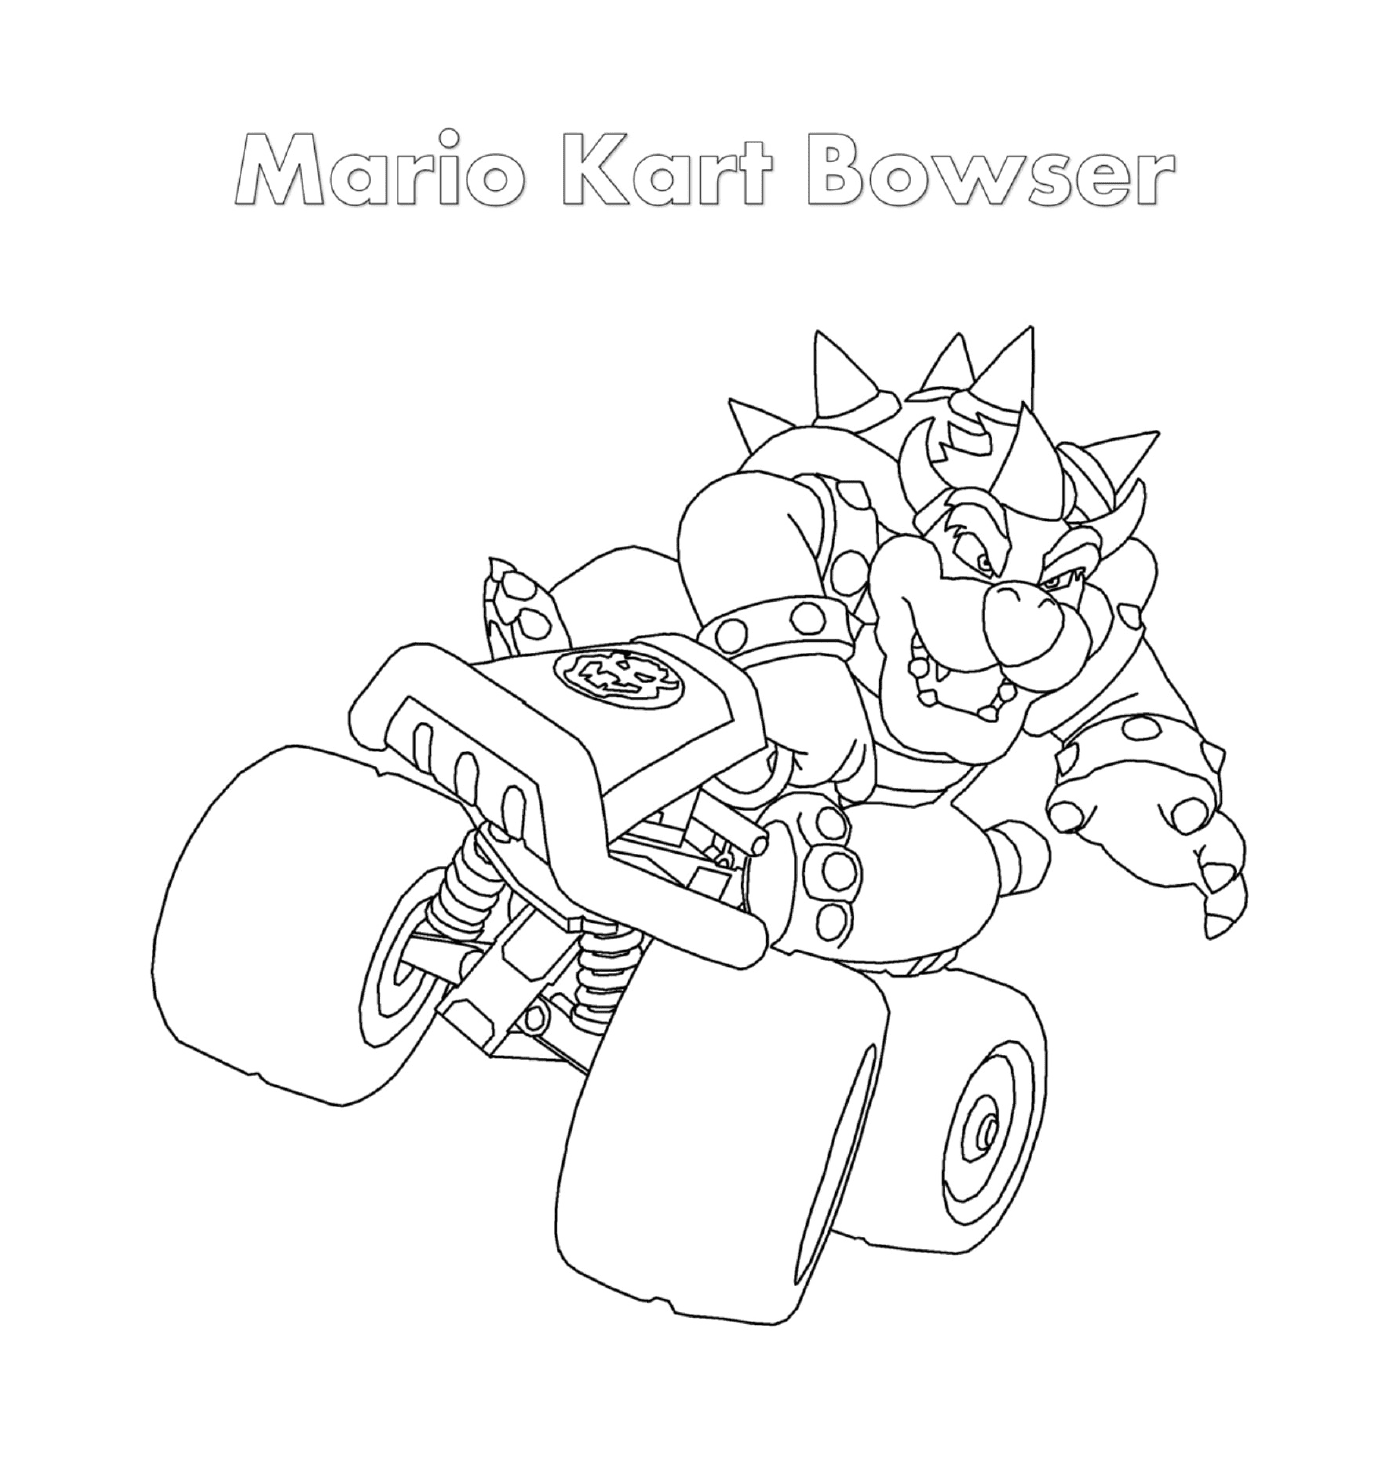   Bowser dans Mario Kart de Nintendo 